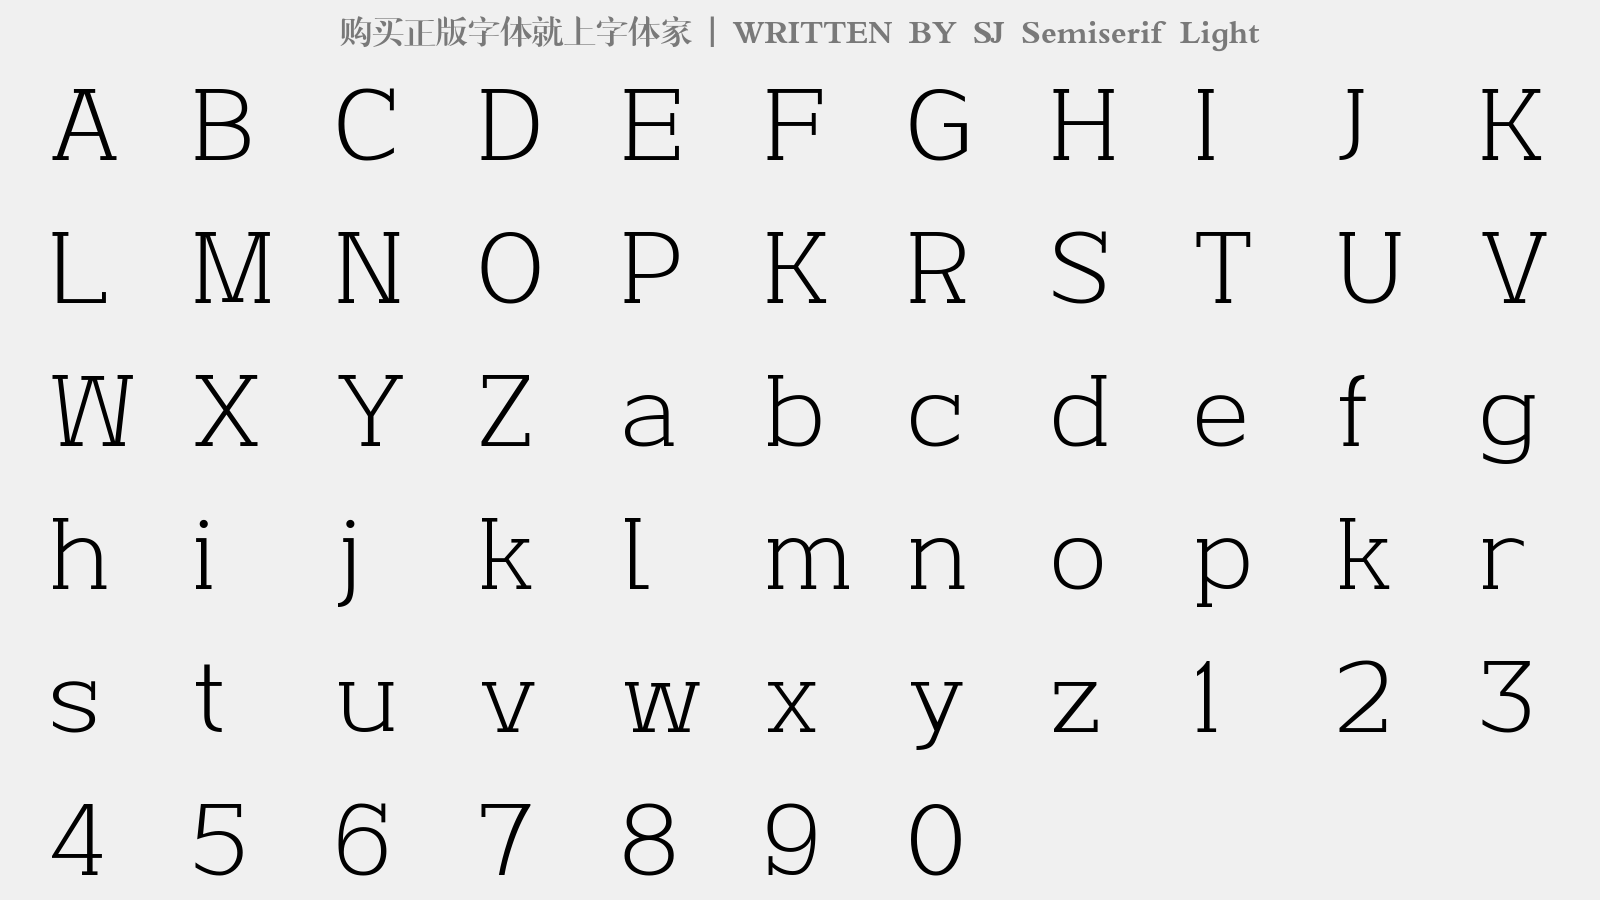 SJ Semiserif Light - 大写字母/小写字母/数字